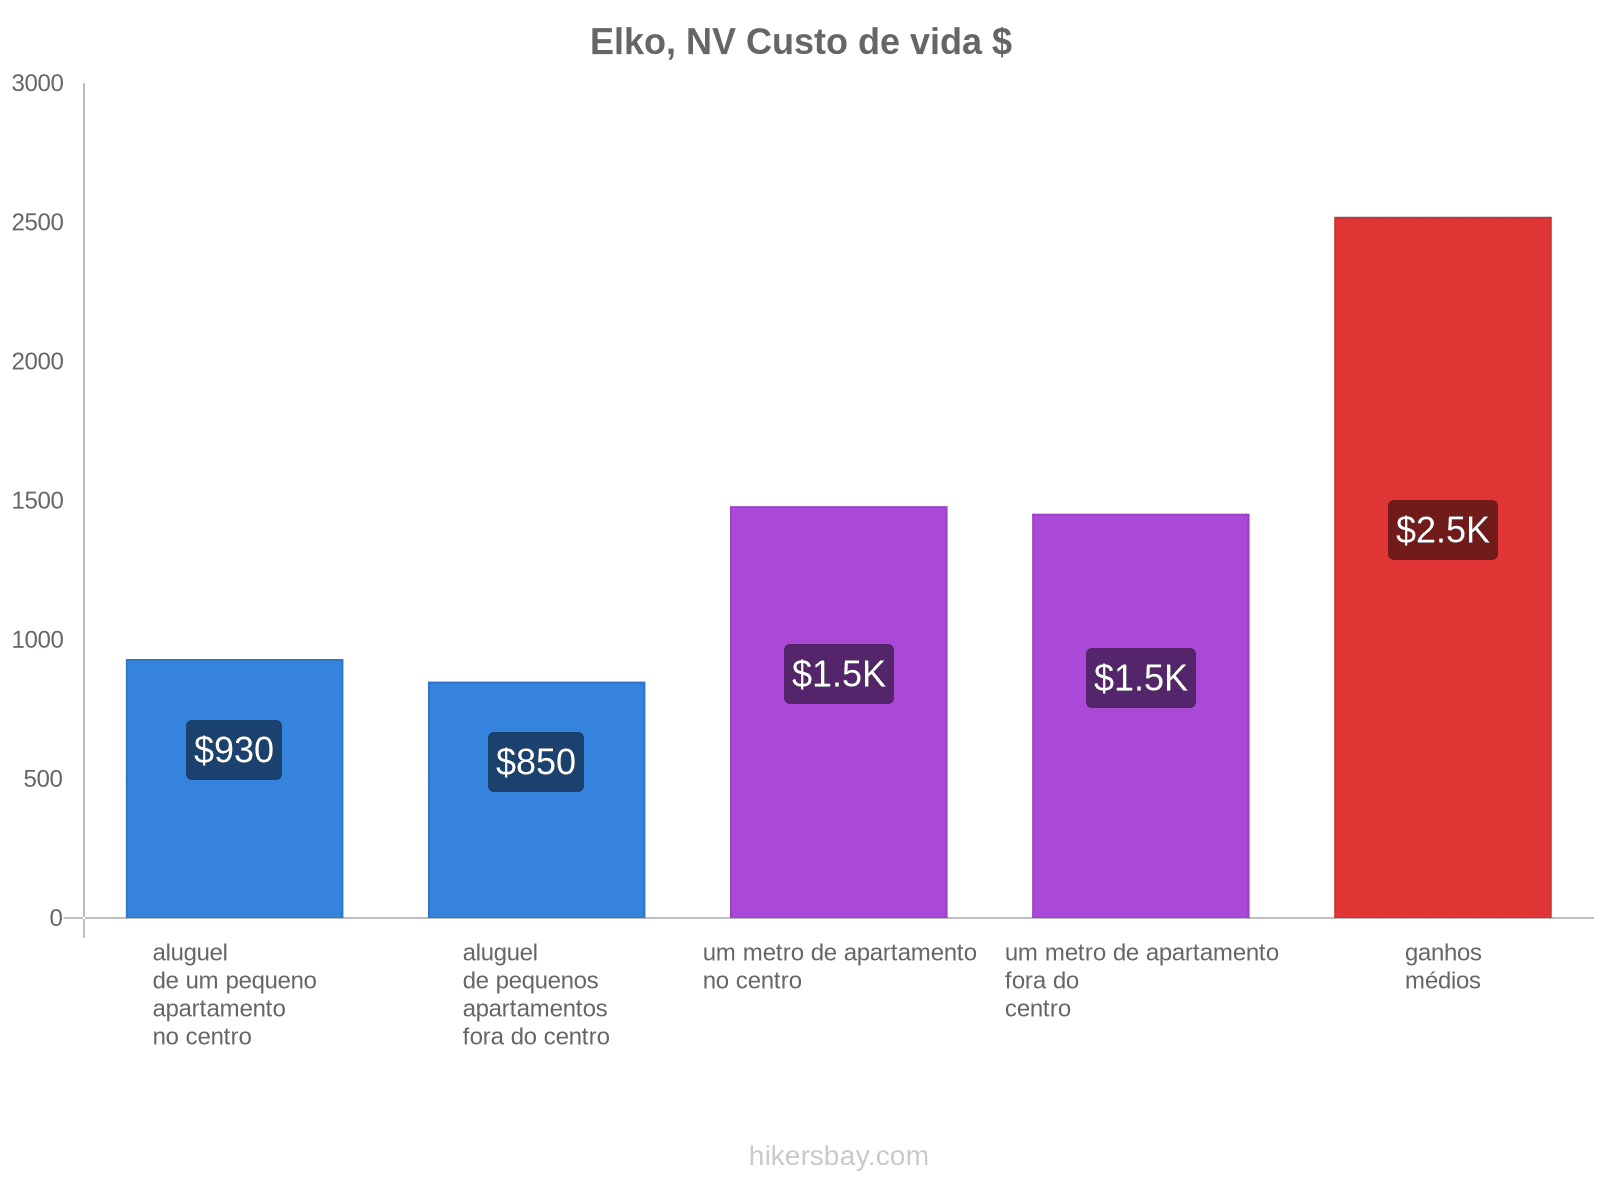 Elko, NV custo de vida hikersbay.com